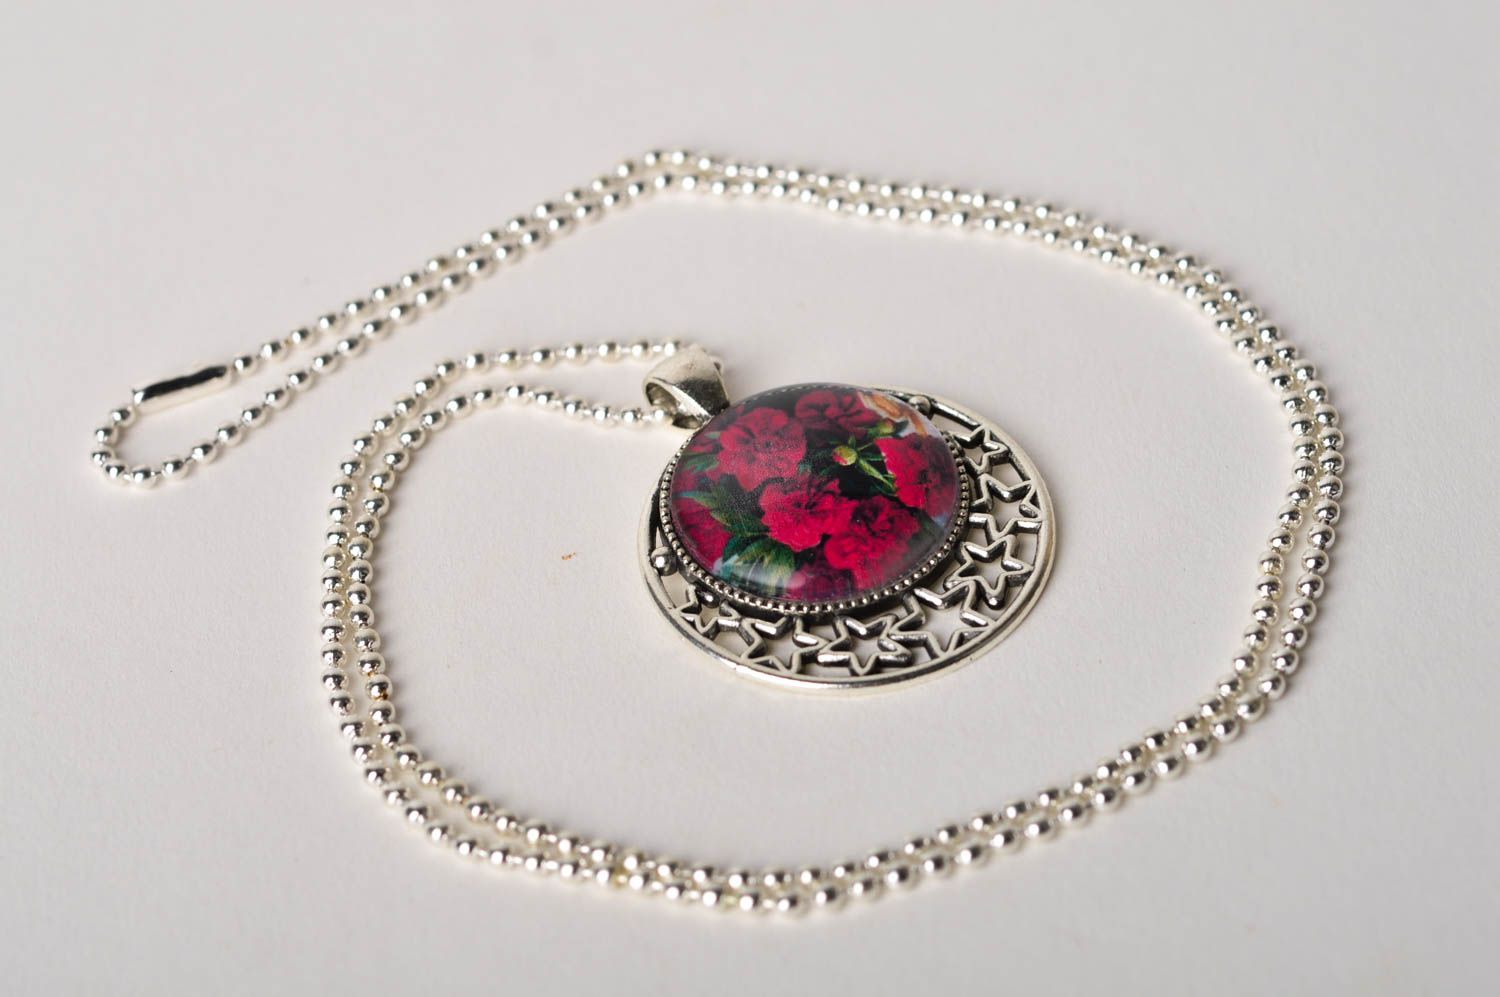 Handmade pendant with delicate print pendant on long chain designer jewelry photo 1